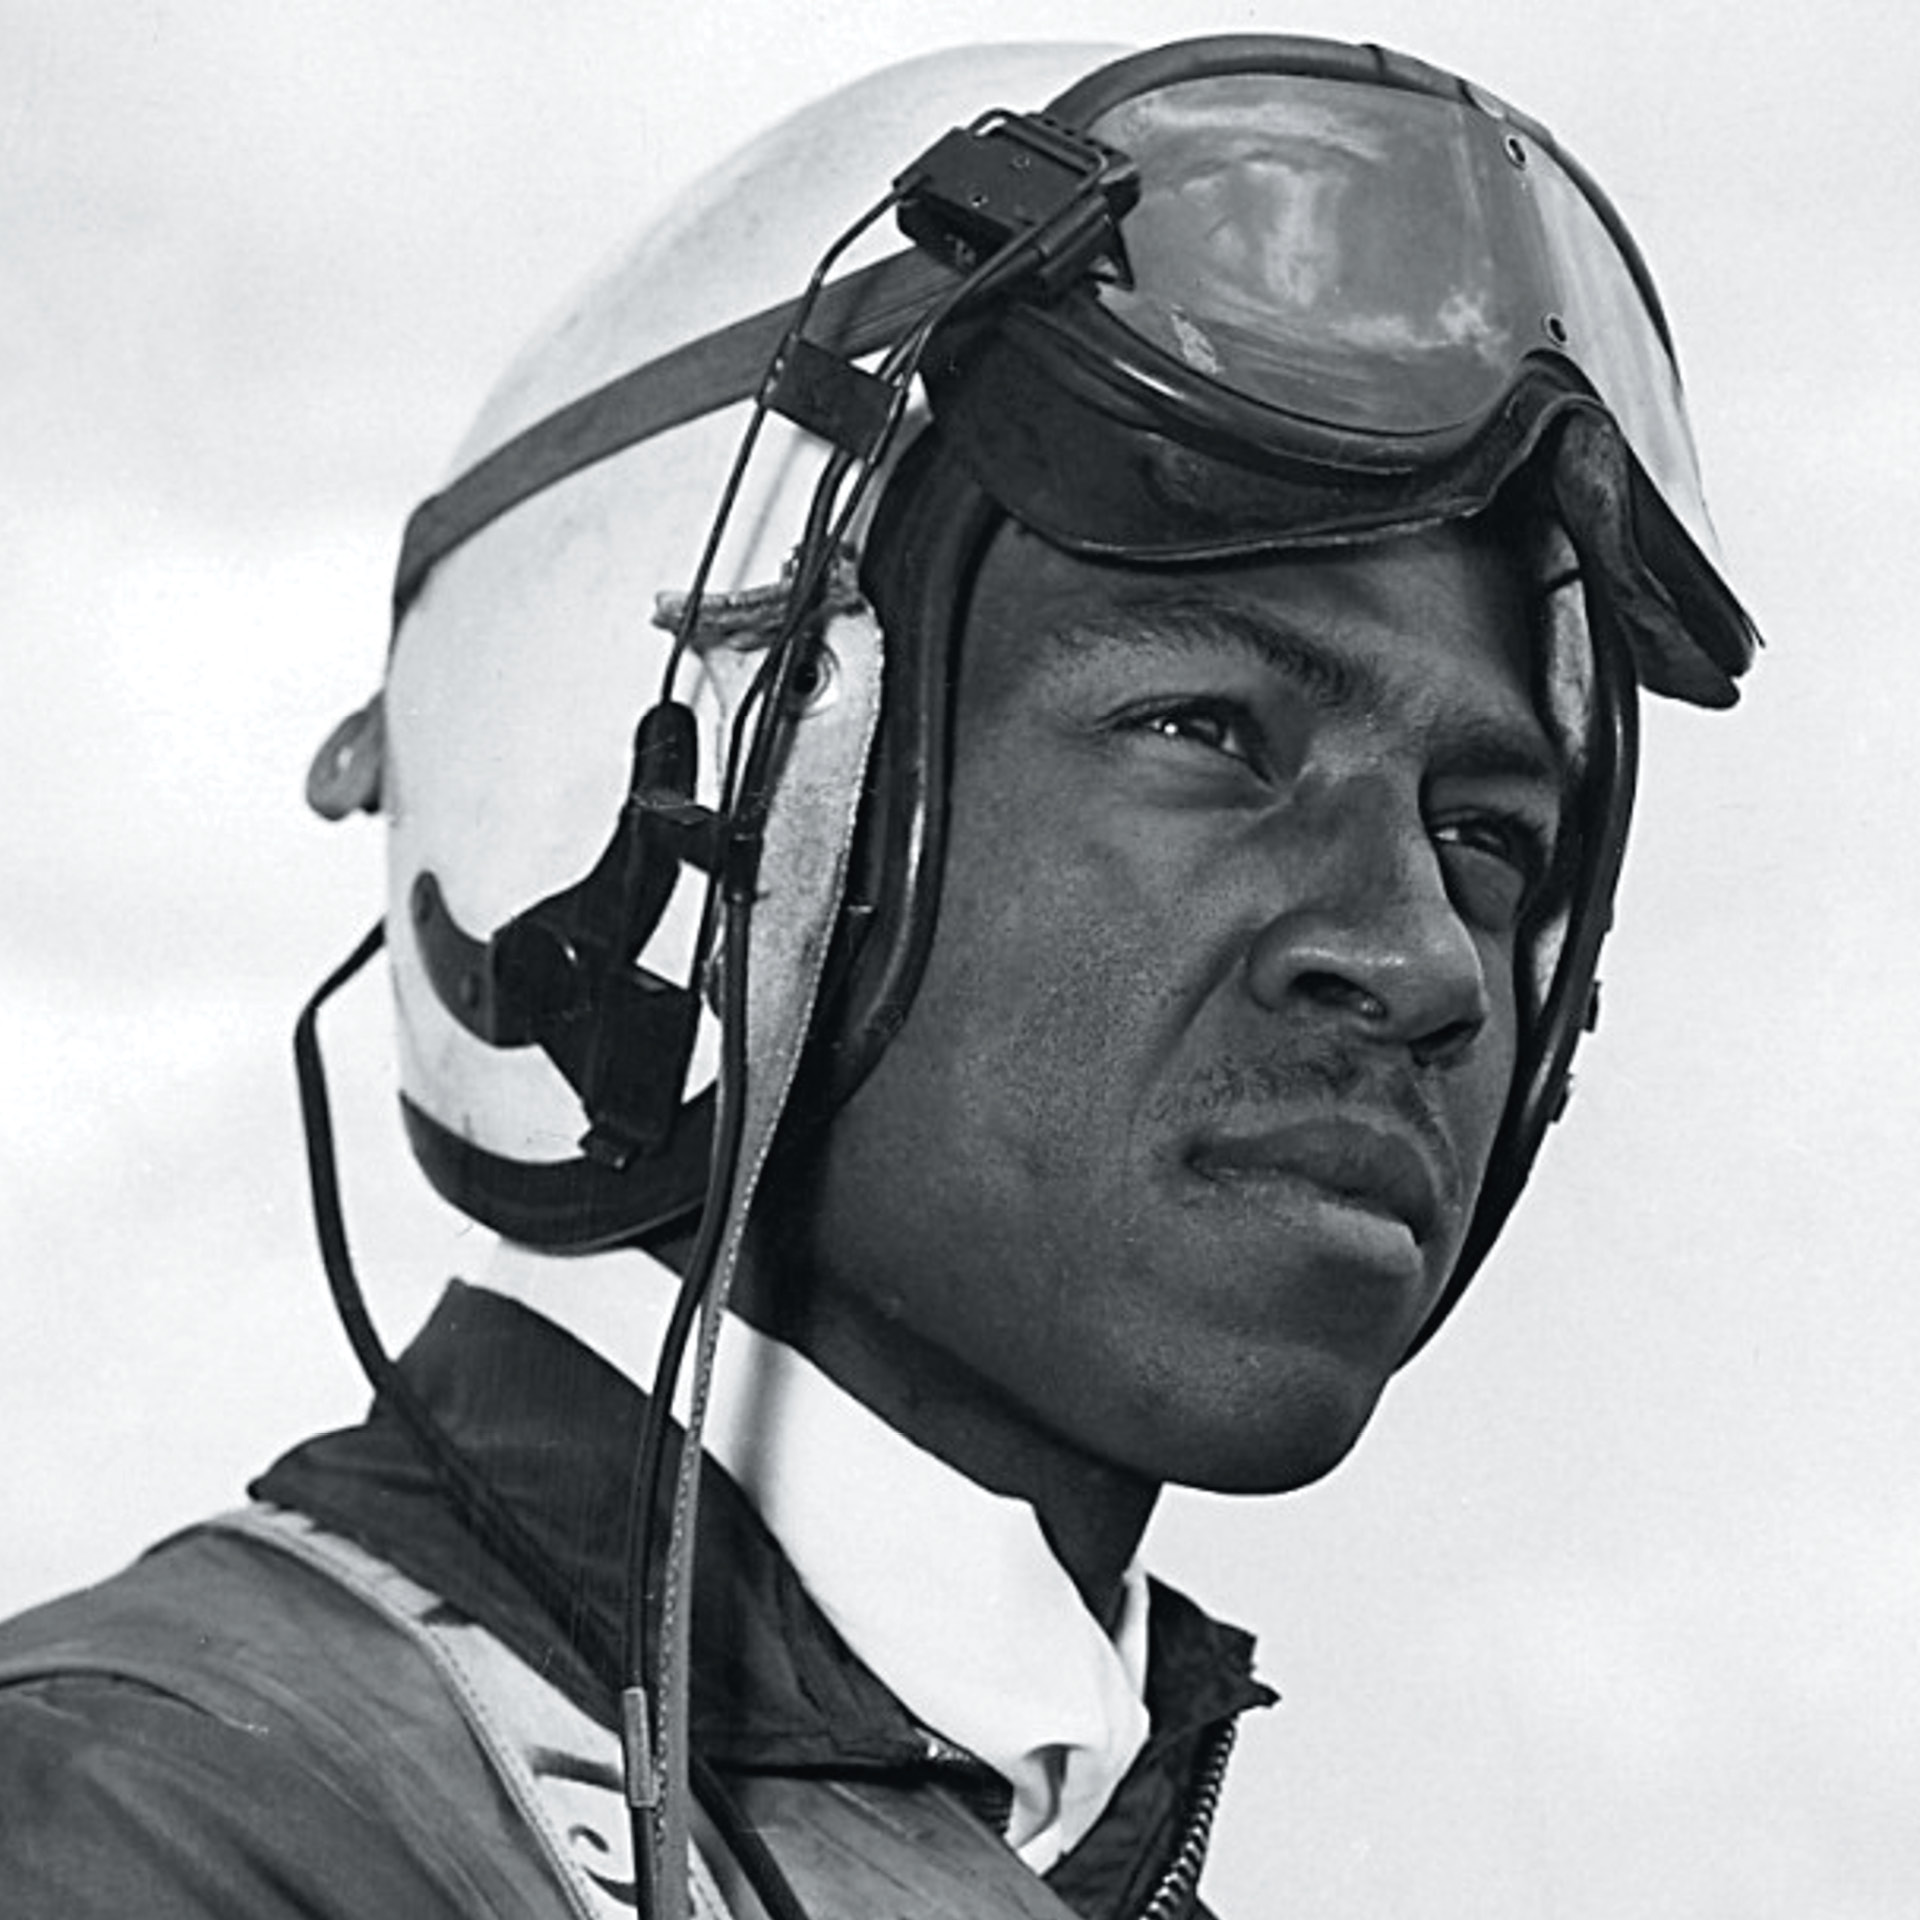 Historic image of pilot Jesse Brown, USN, circa 1950